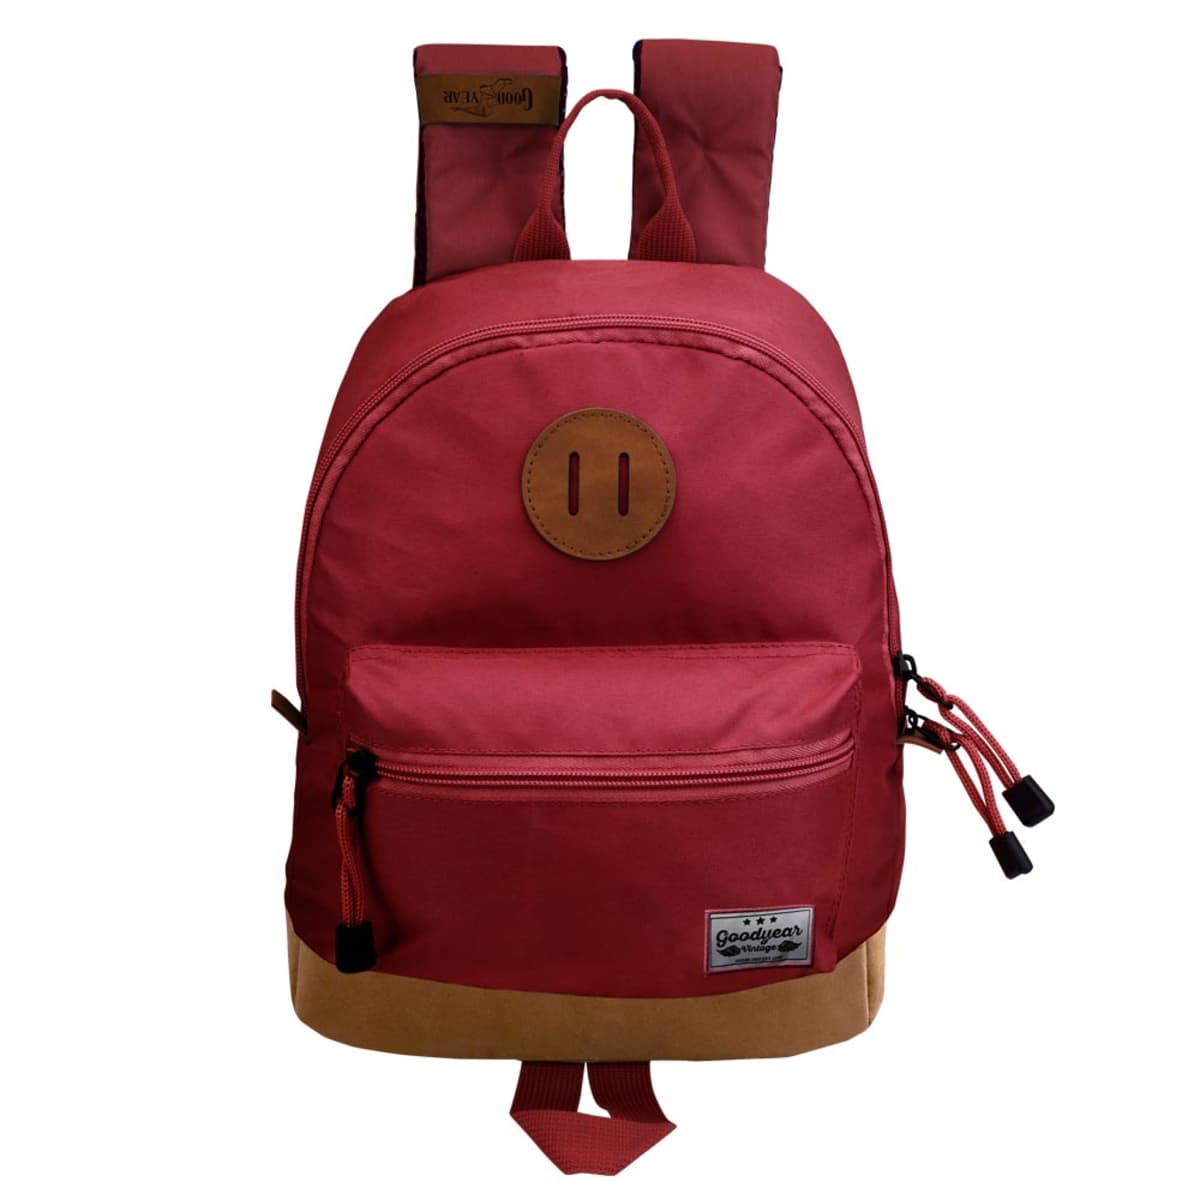 Mochila / Backpack para mujer, marca Holly Land, color rosa, mod. 996187